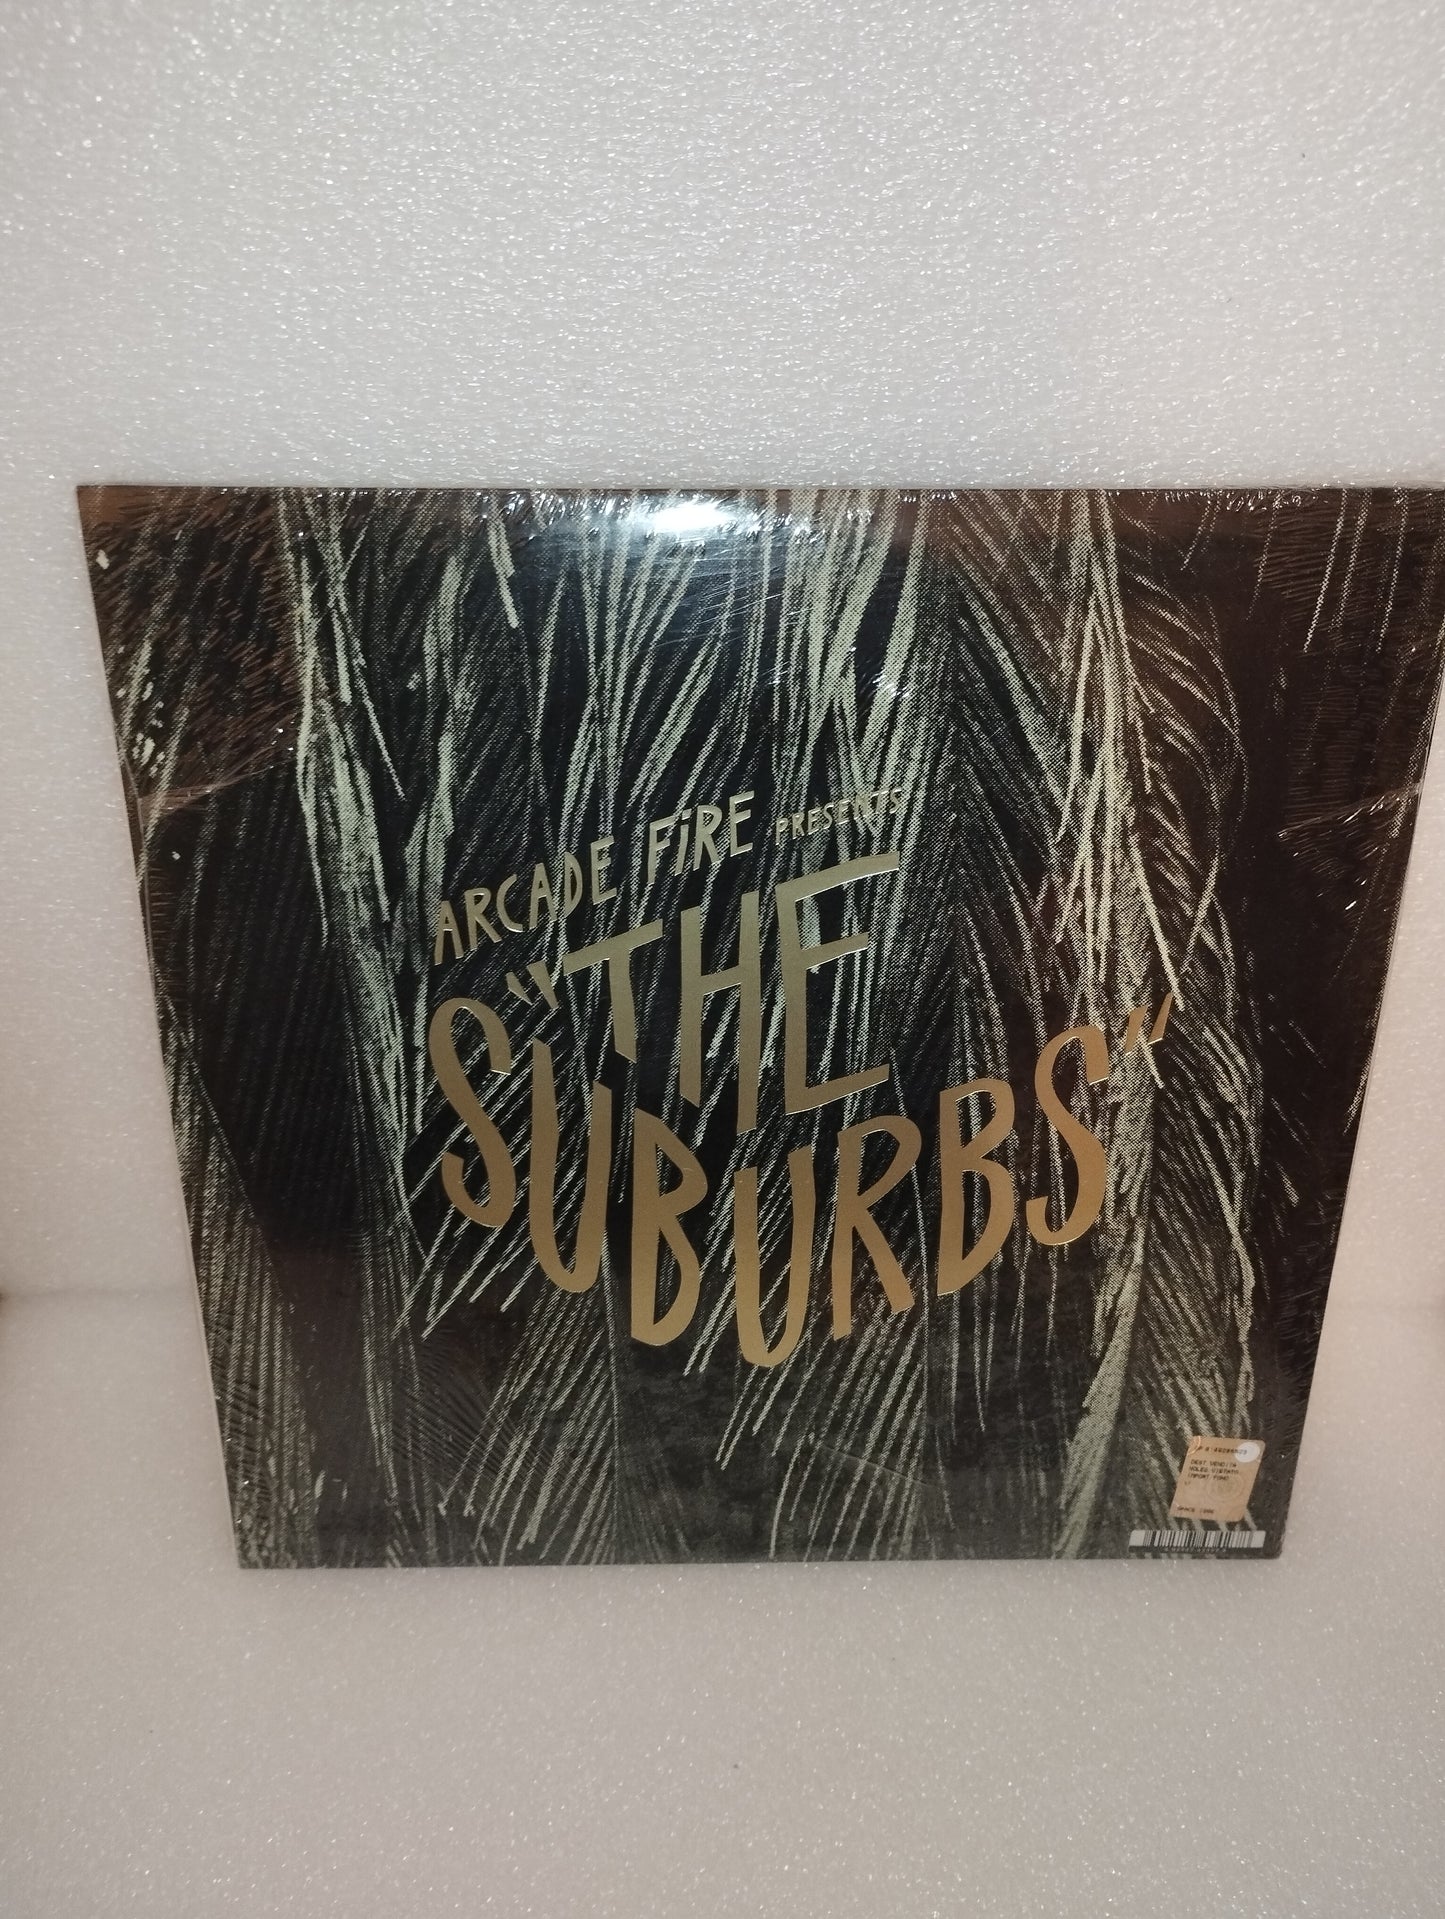 The Suburbs Arcade Fire

 2LP 33 rpm

 Genre: Rock, indie rock